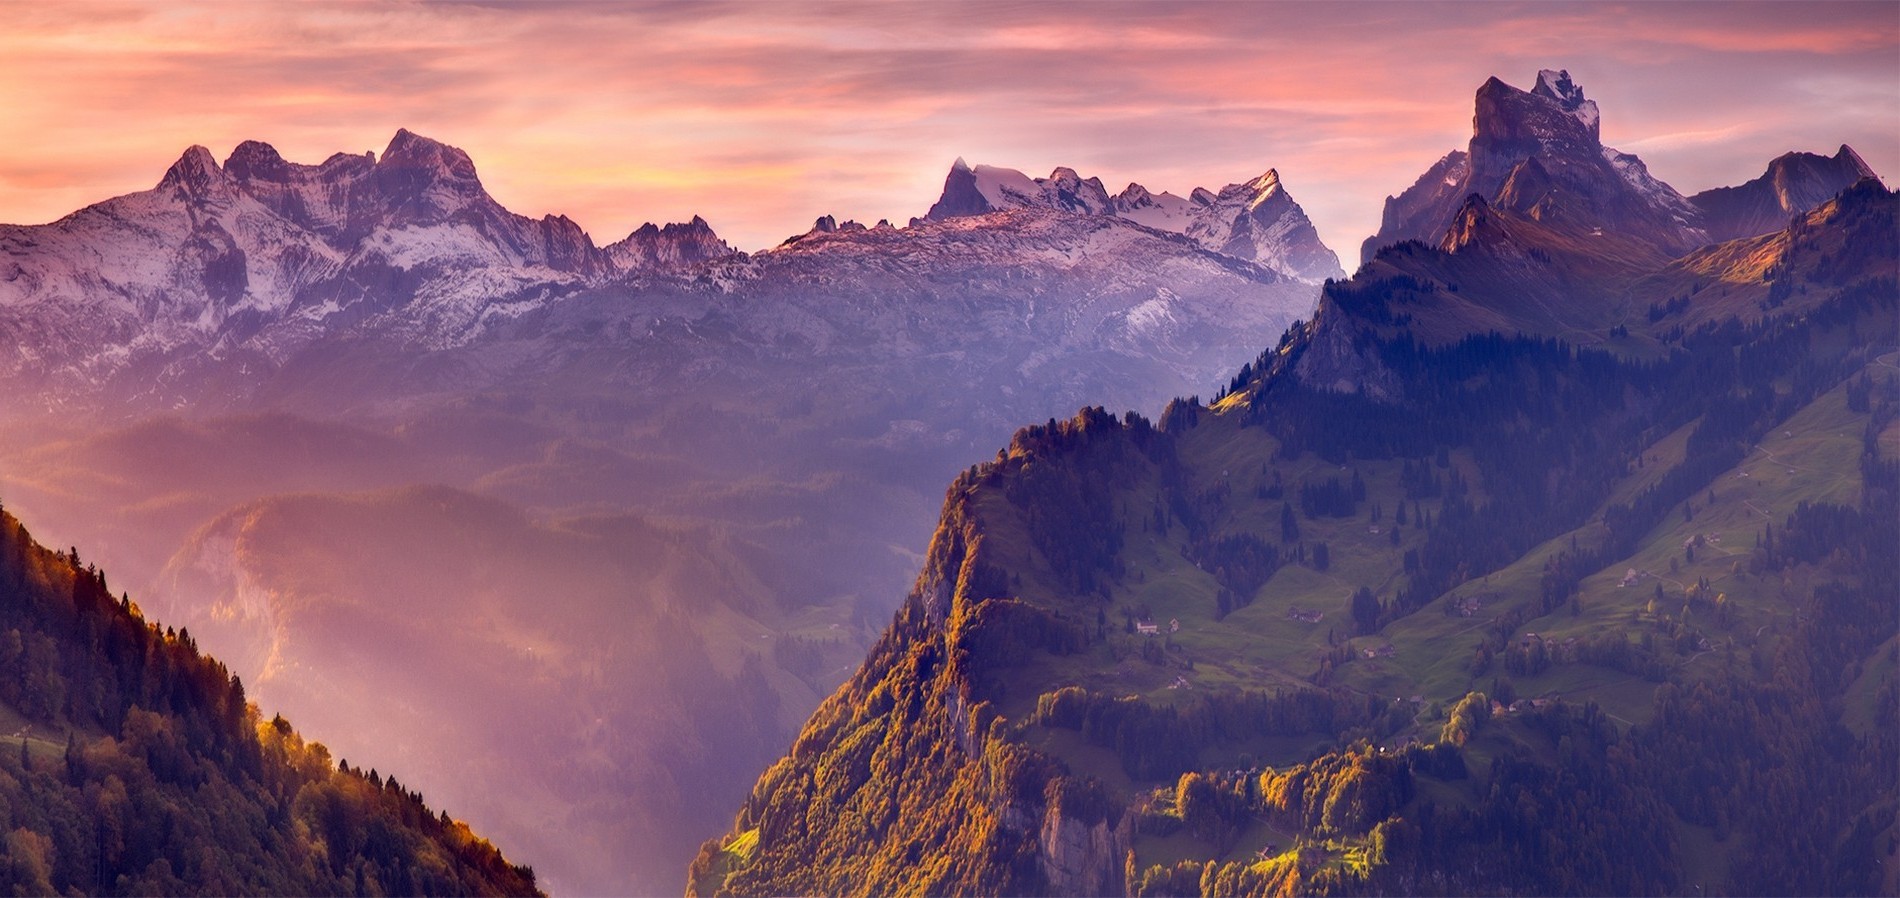 nature, Landscape, Swiss Alps, Mountains, Snowy Peak, Forest, Mist, Sunlight, Village, Grass Wallpaper